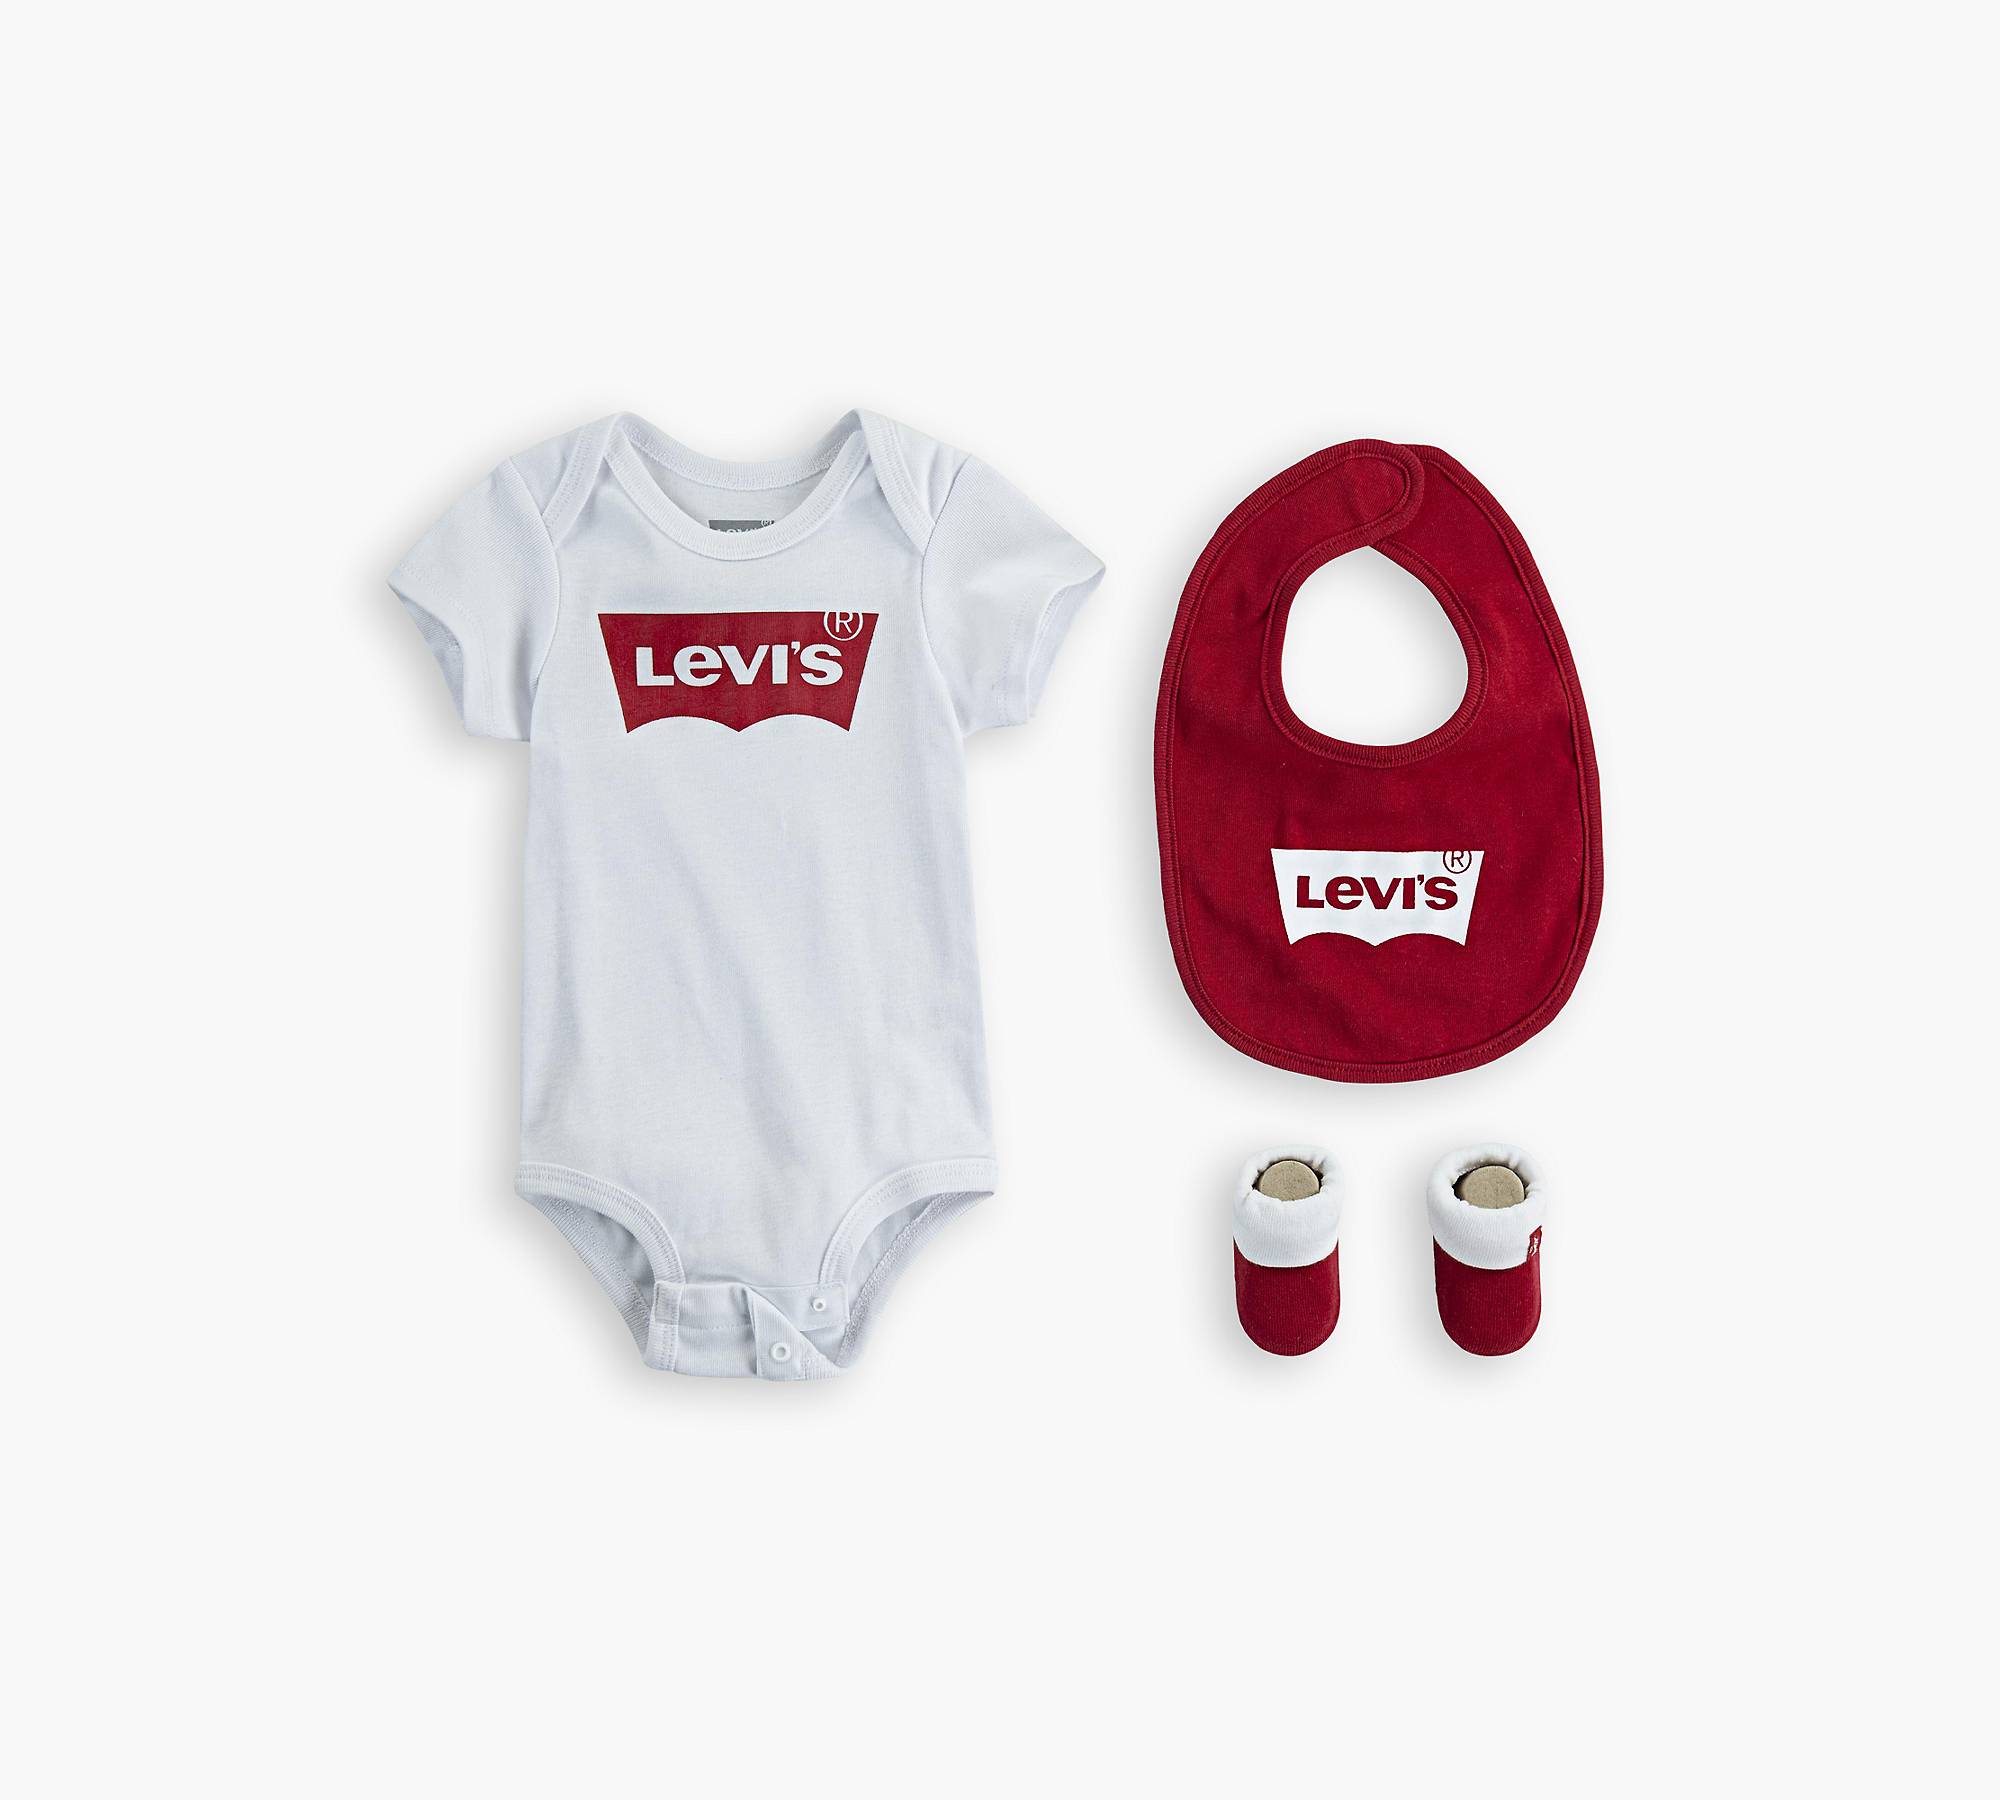 frekvens pensum tvilling Baby Logo Bodysuit, Bib And Booties Set 6-12m - White | Levi's® US